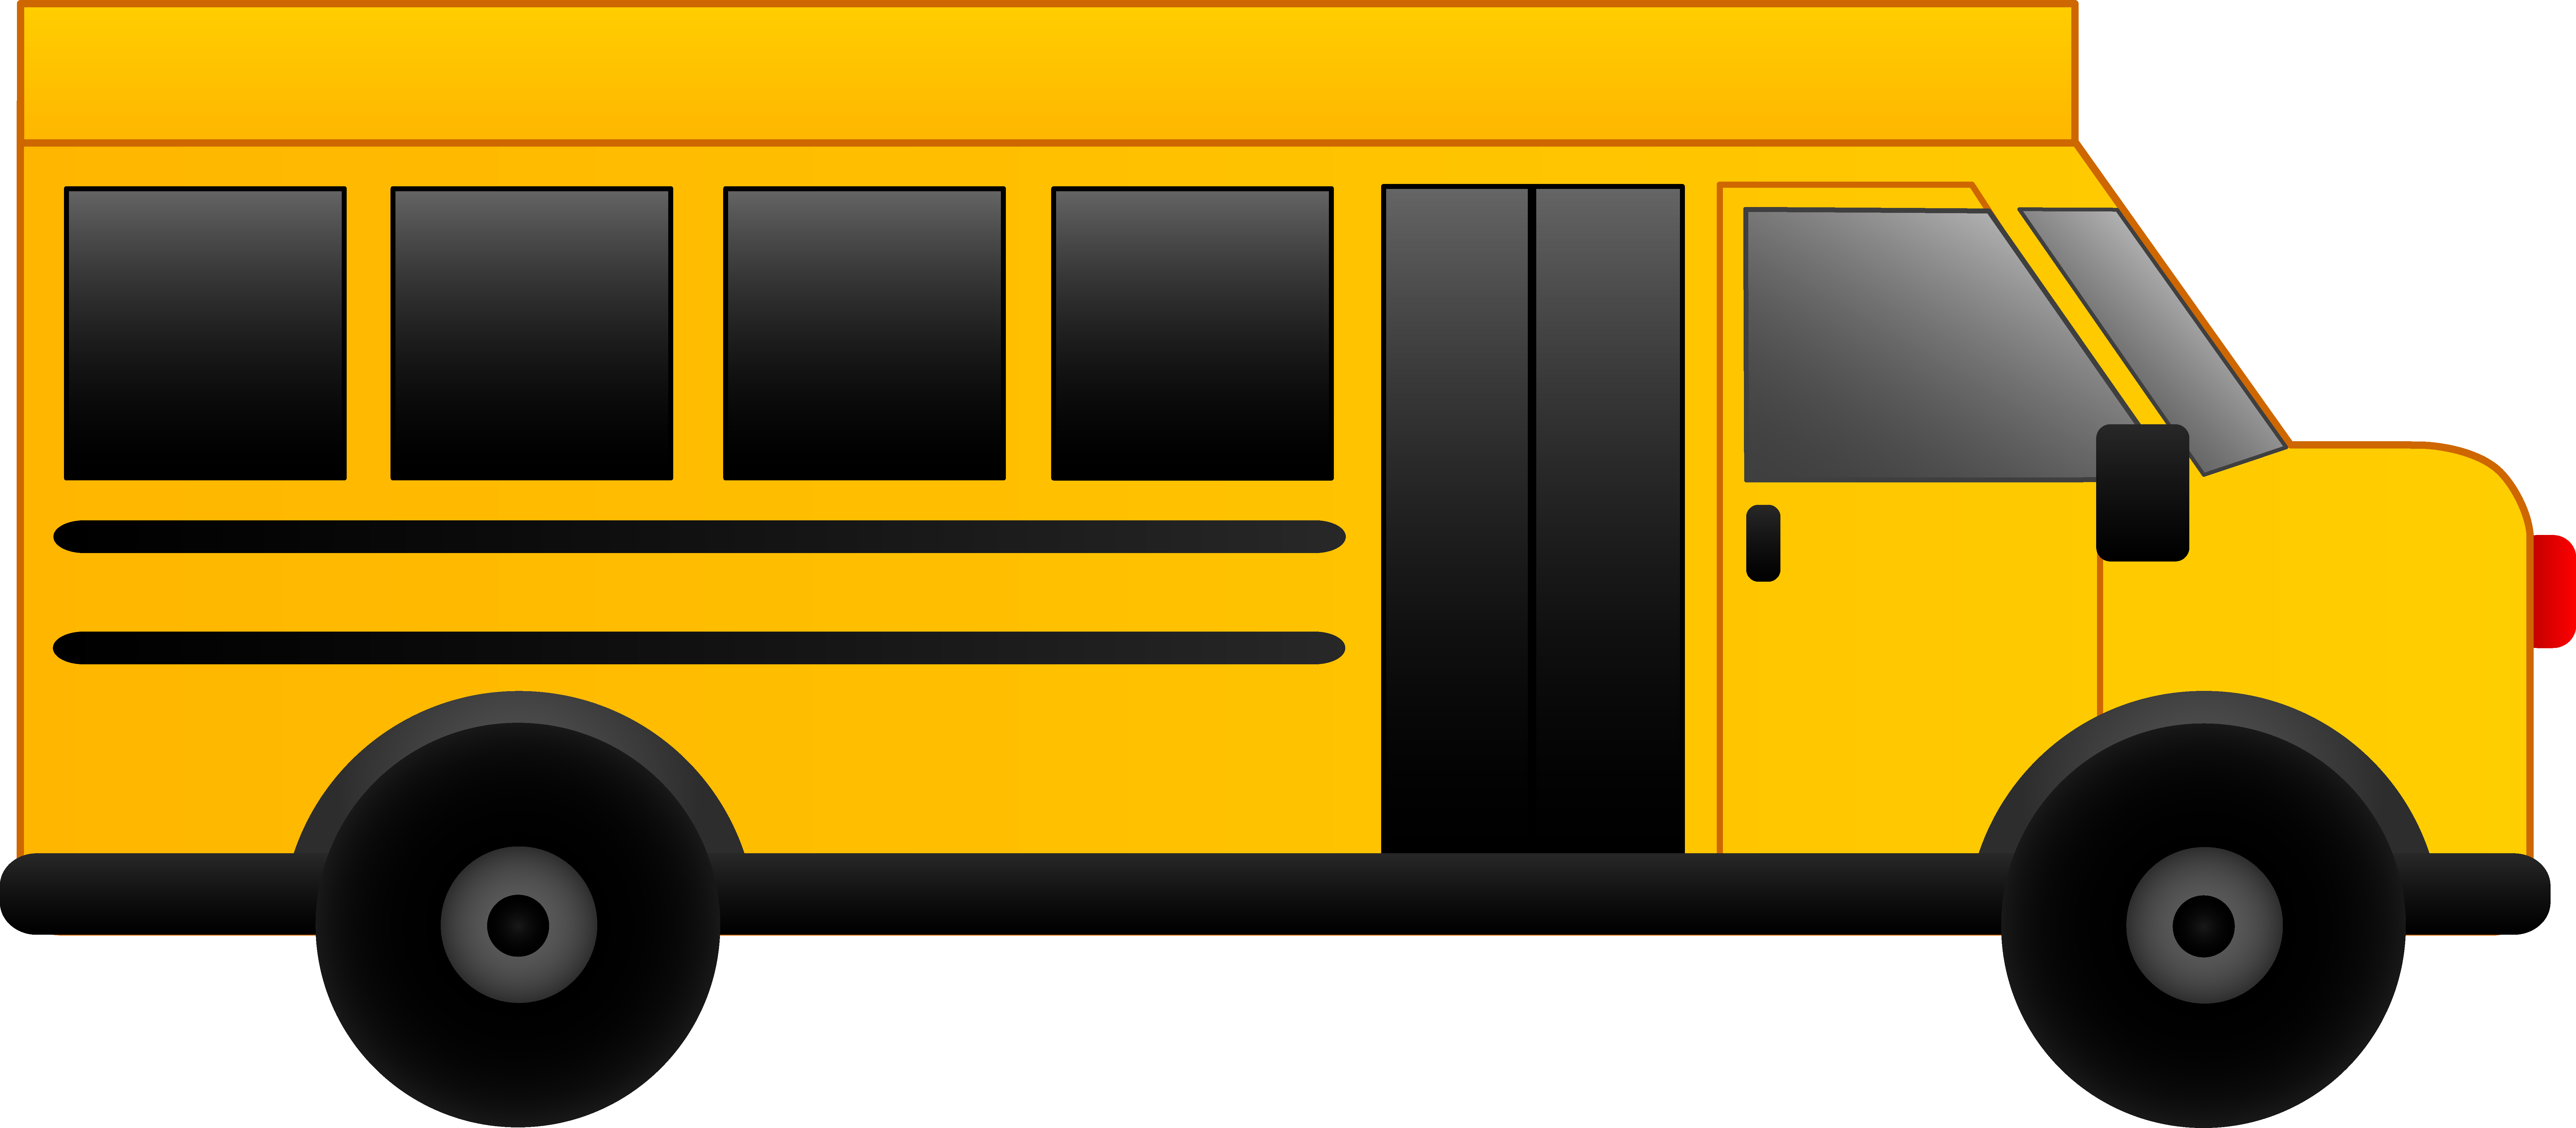 Children on school bus clipar